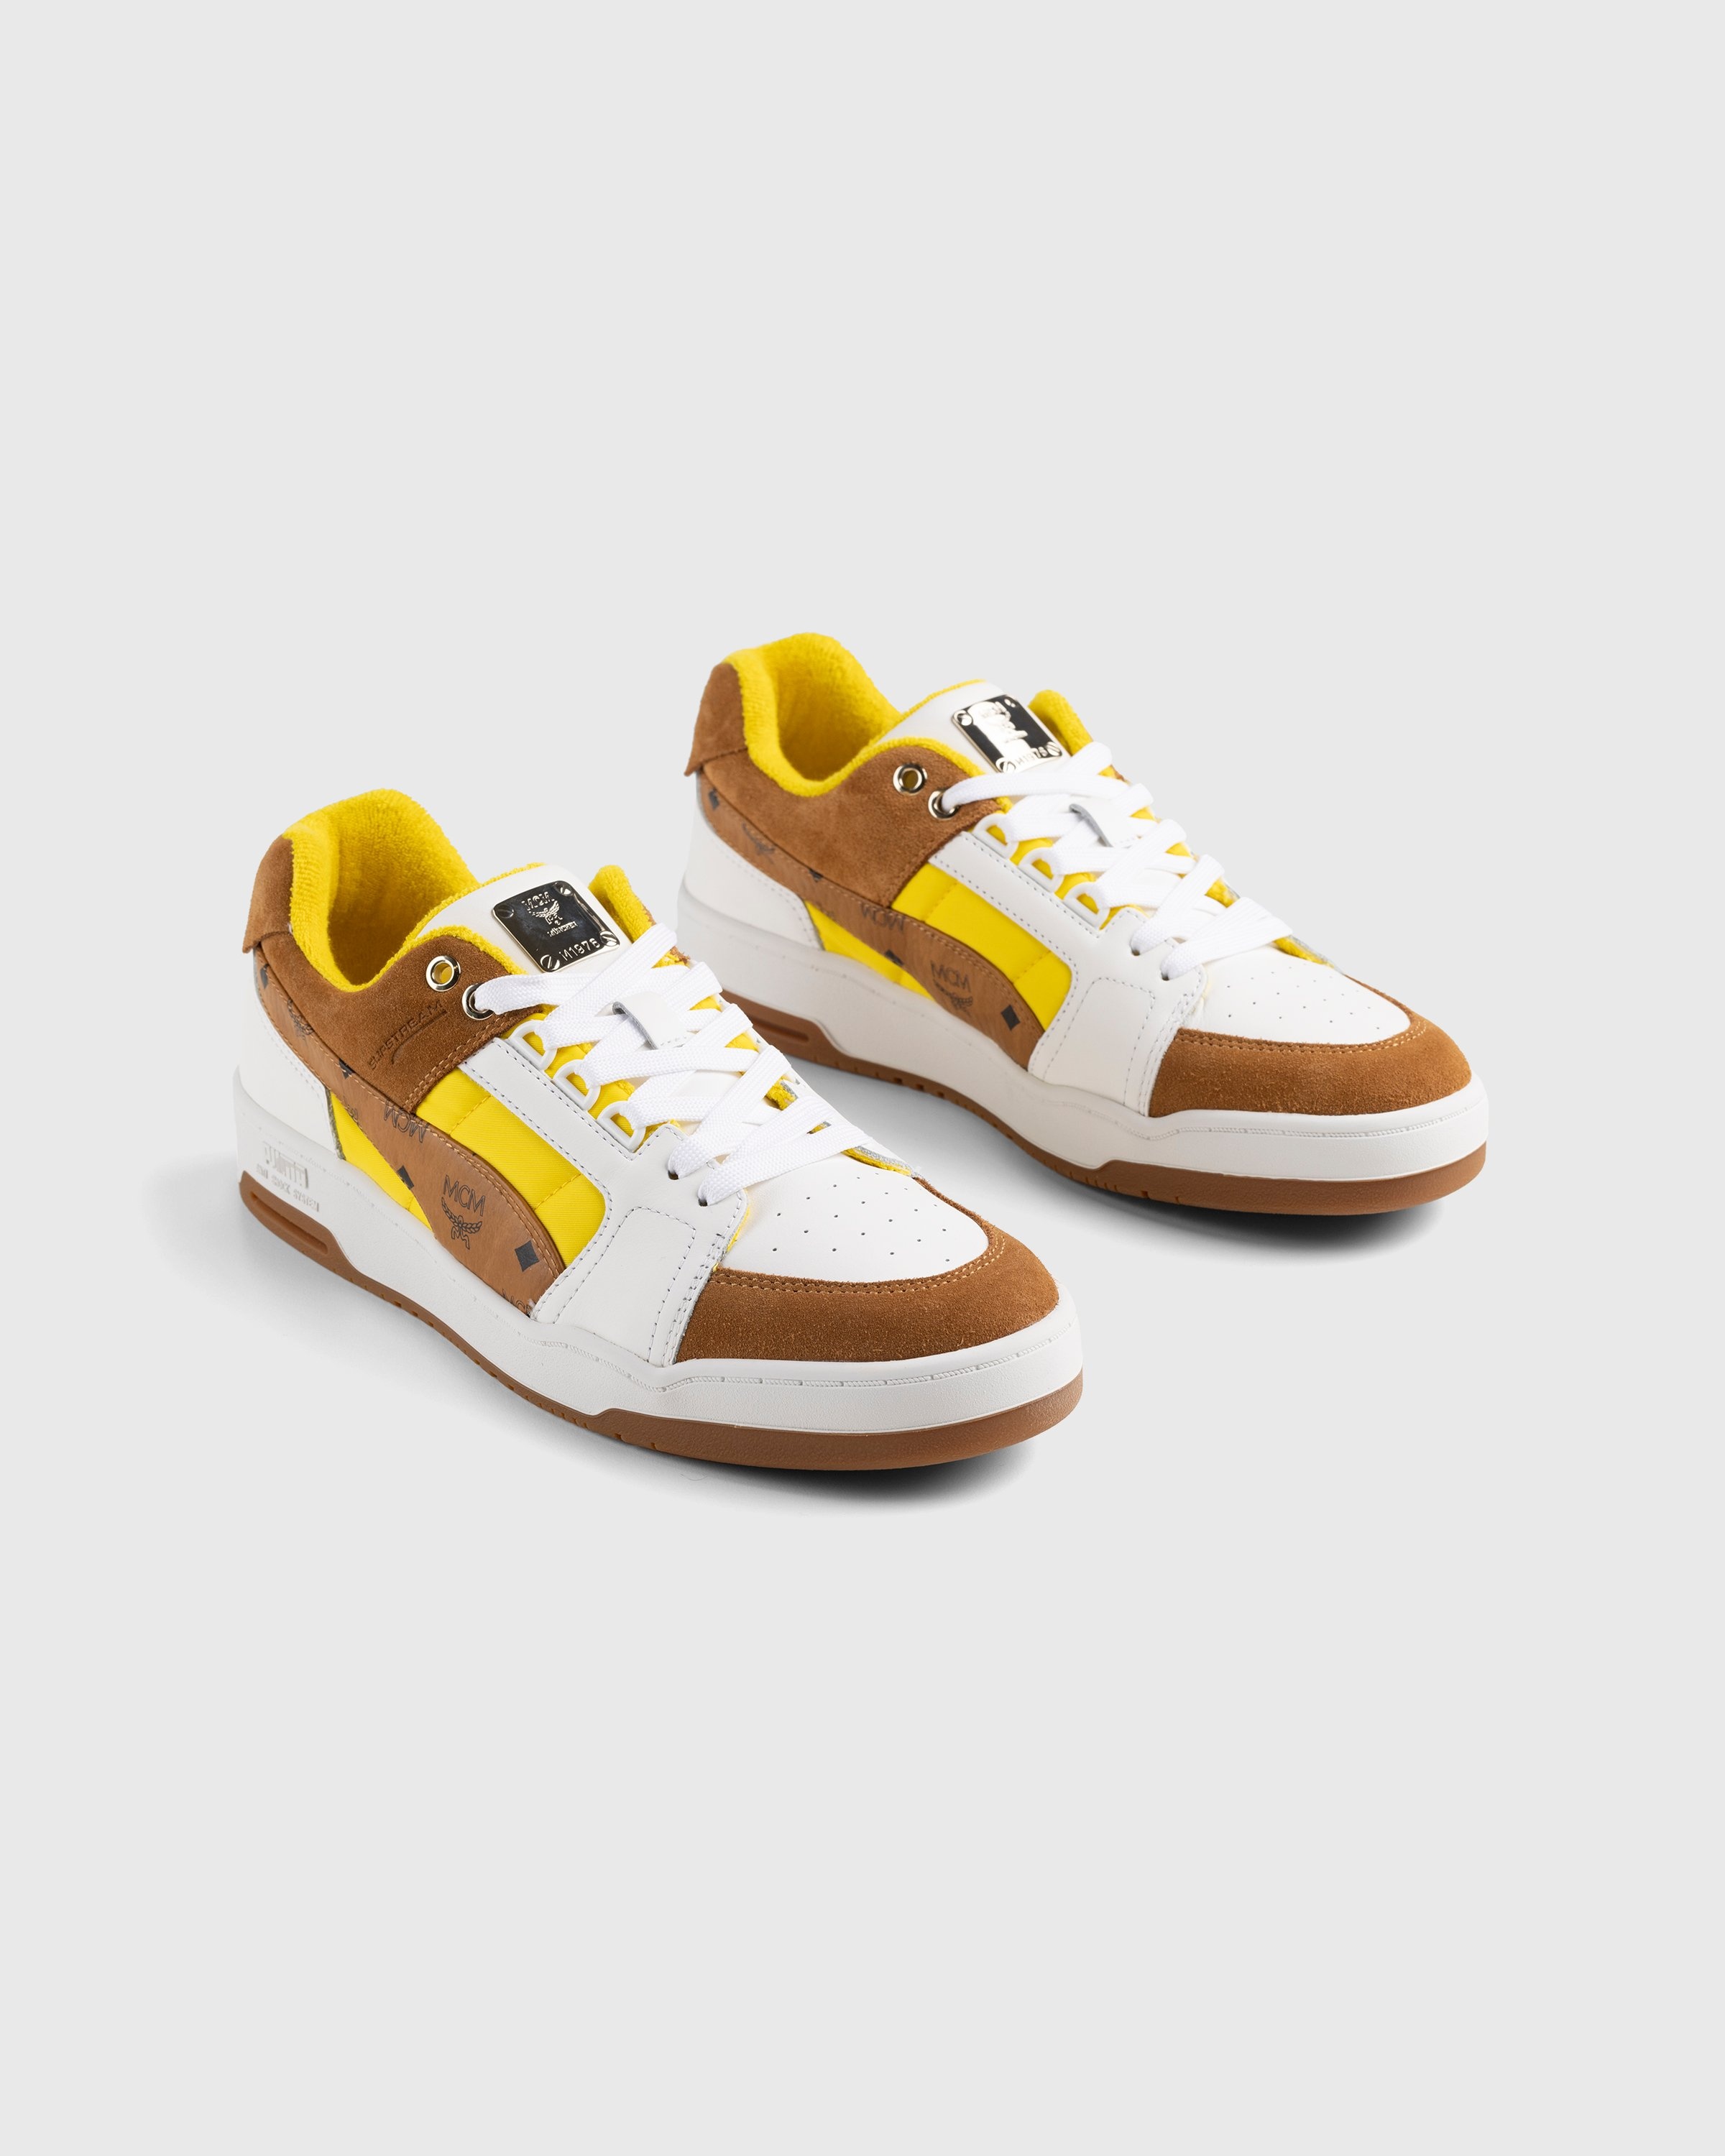 Puma x MCM – Slipstream Lo White/Yellow - Low Top Sneakers - Beige - Image 3